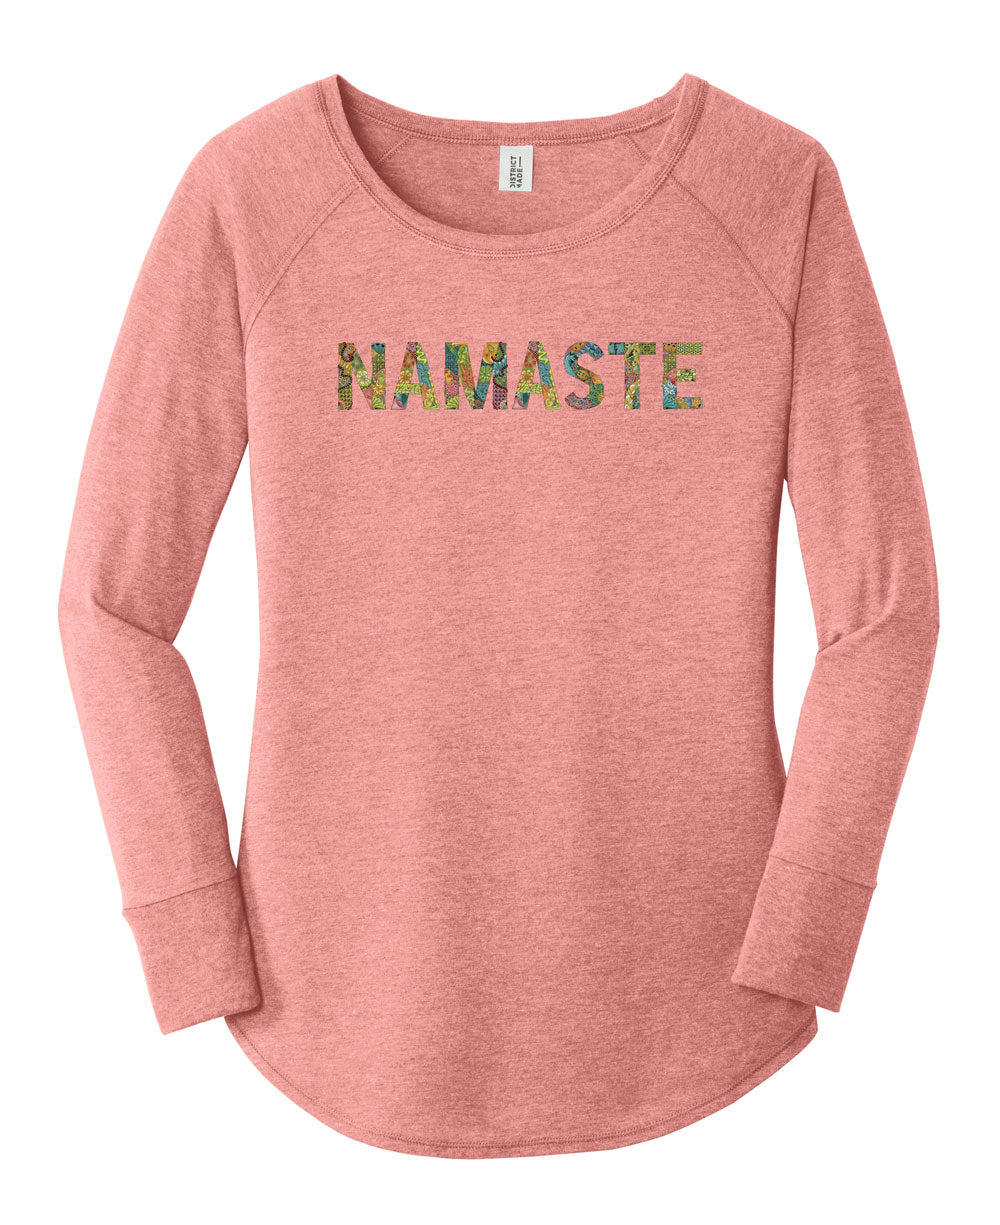 Artistic Namaste Blush Long Sleeve Tunic Tee - Shirts & Tops S